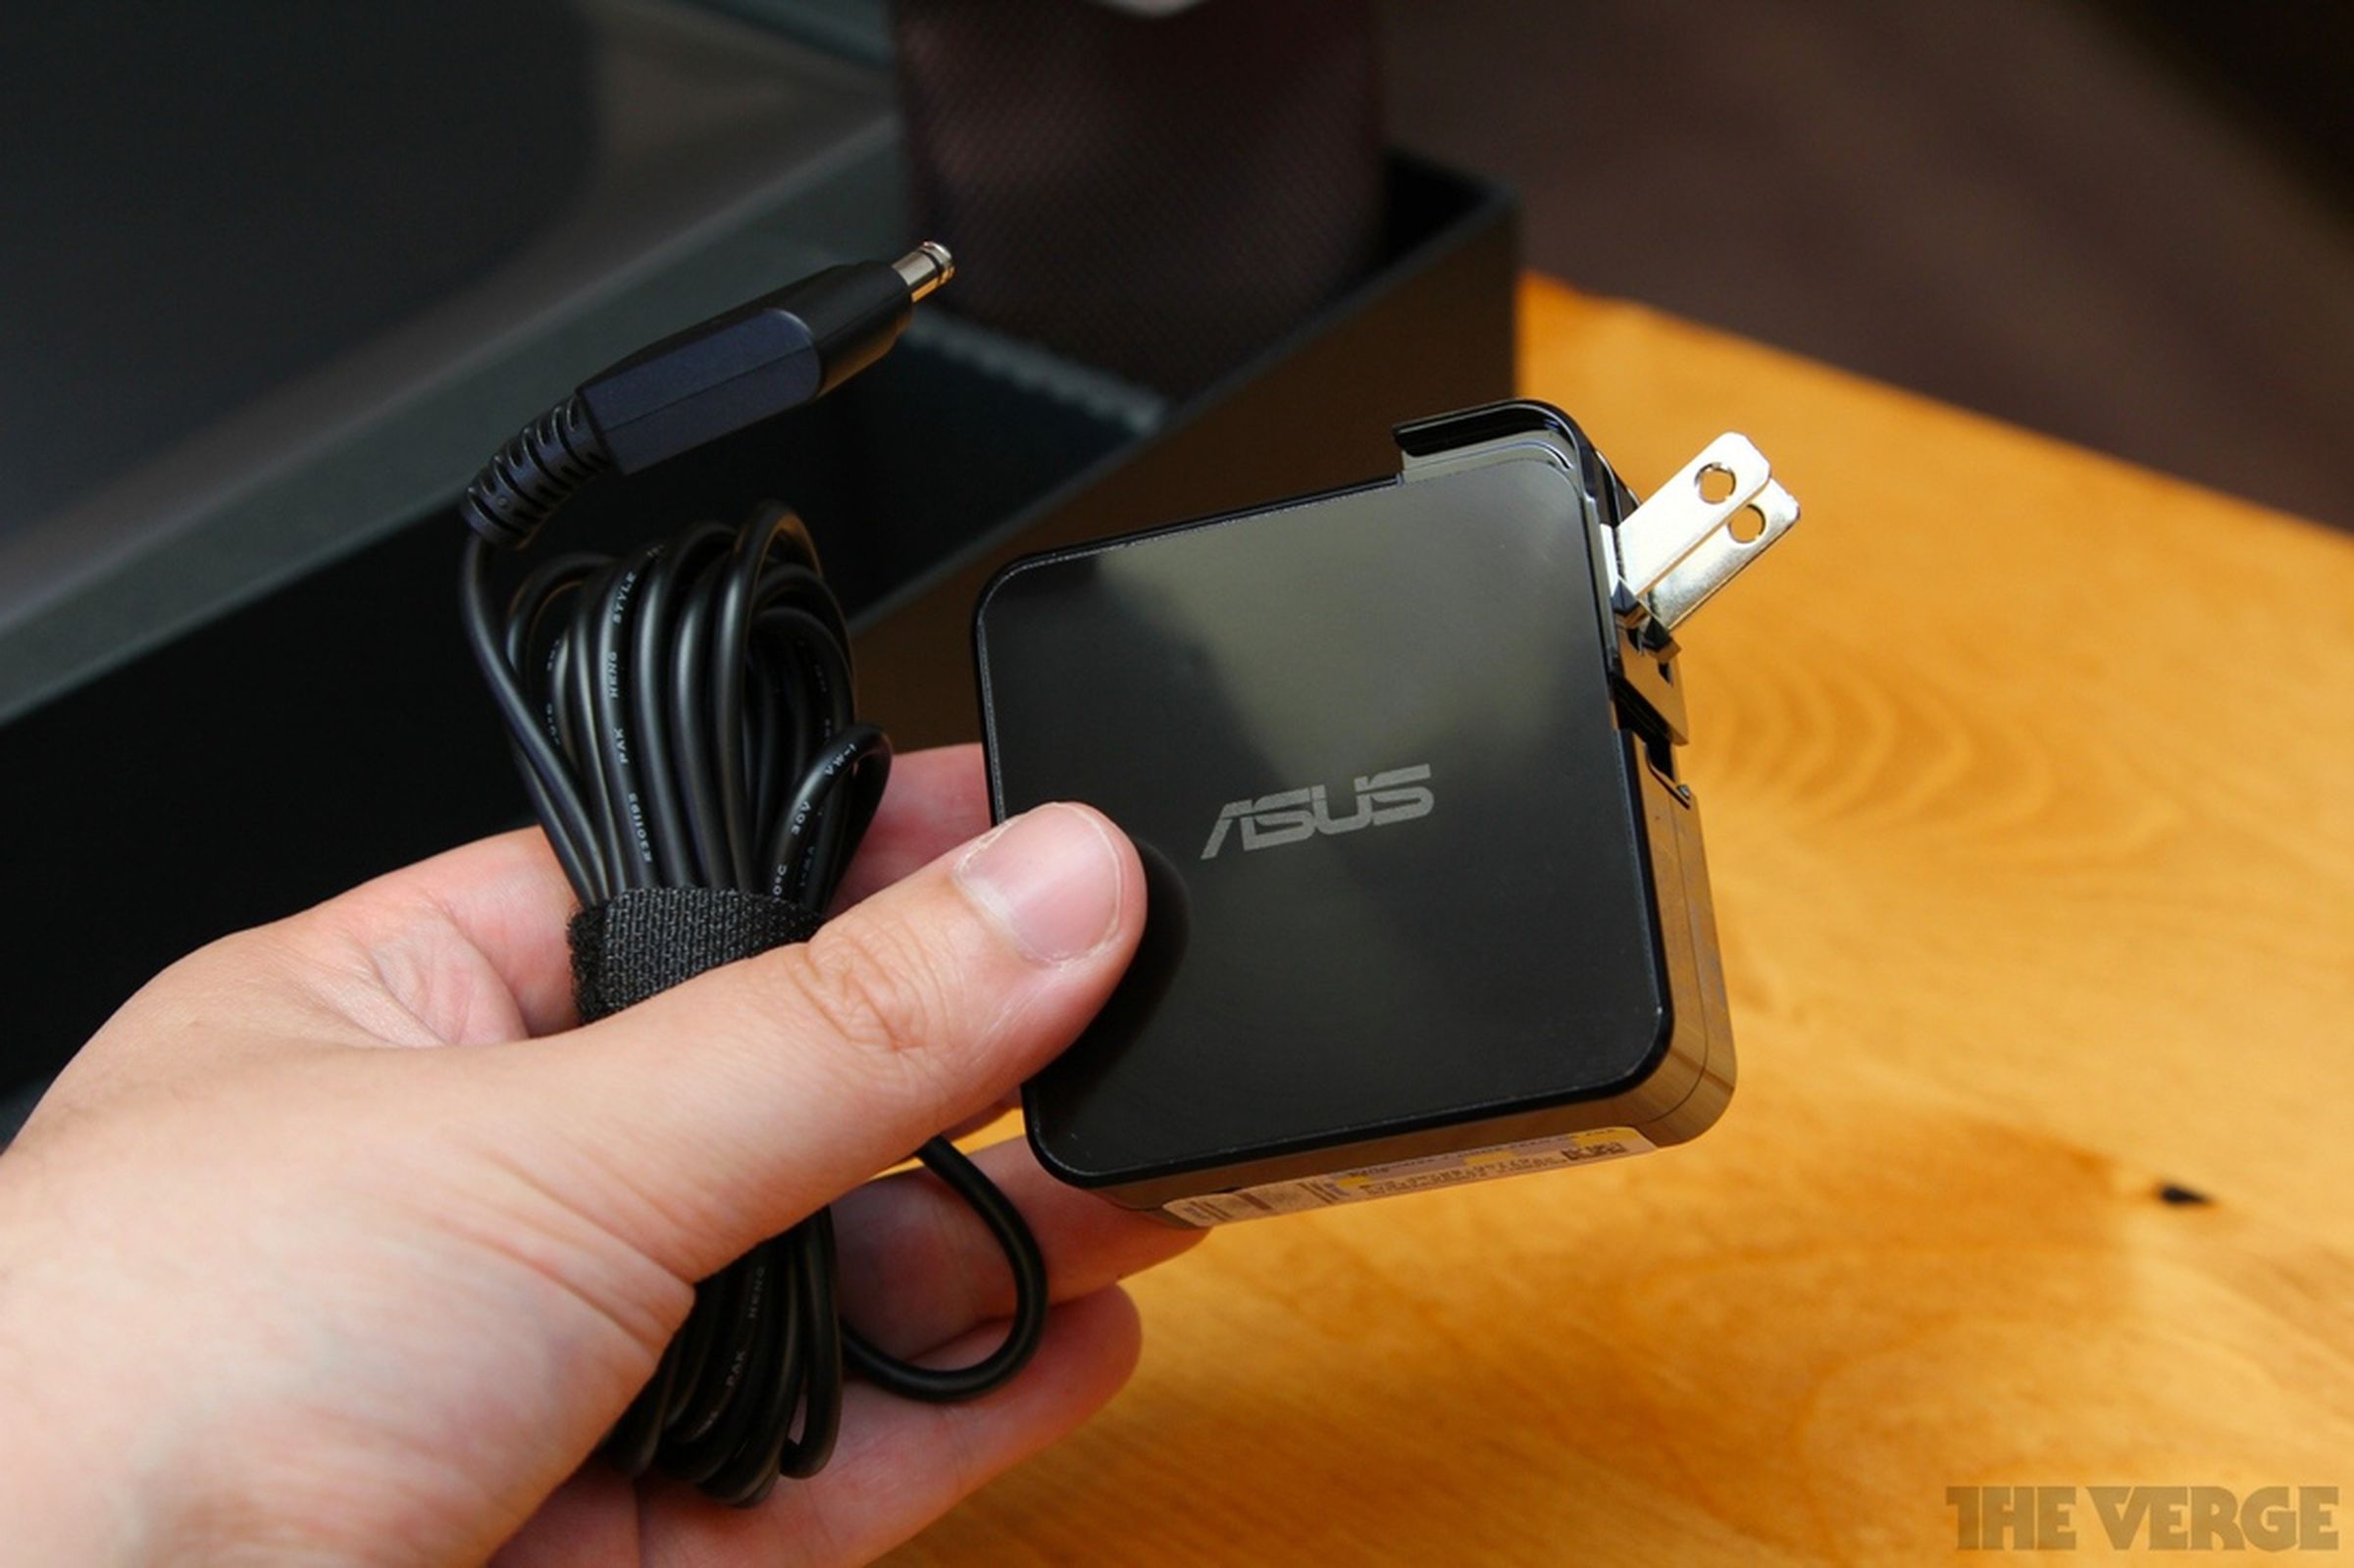 Asus Zenbook Prime UX31A pictures